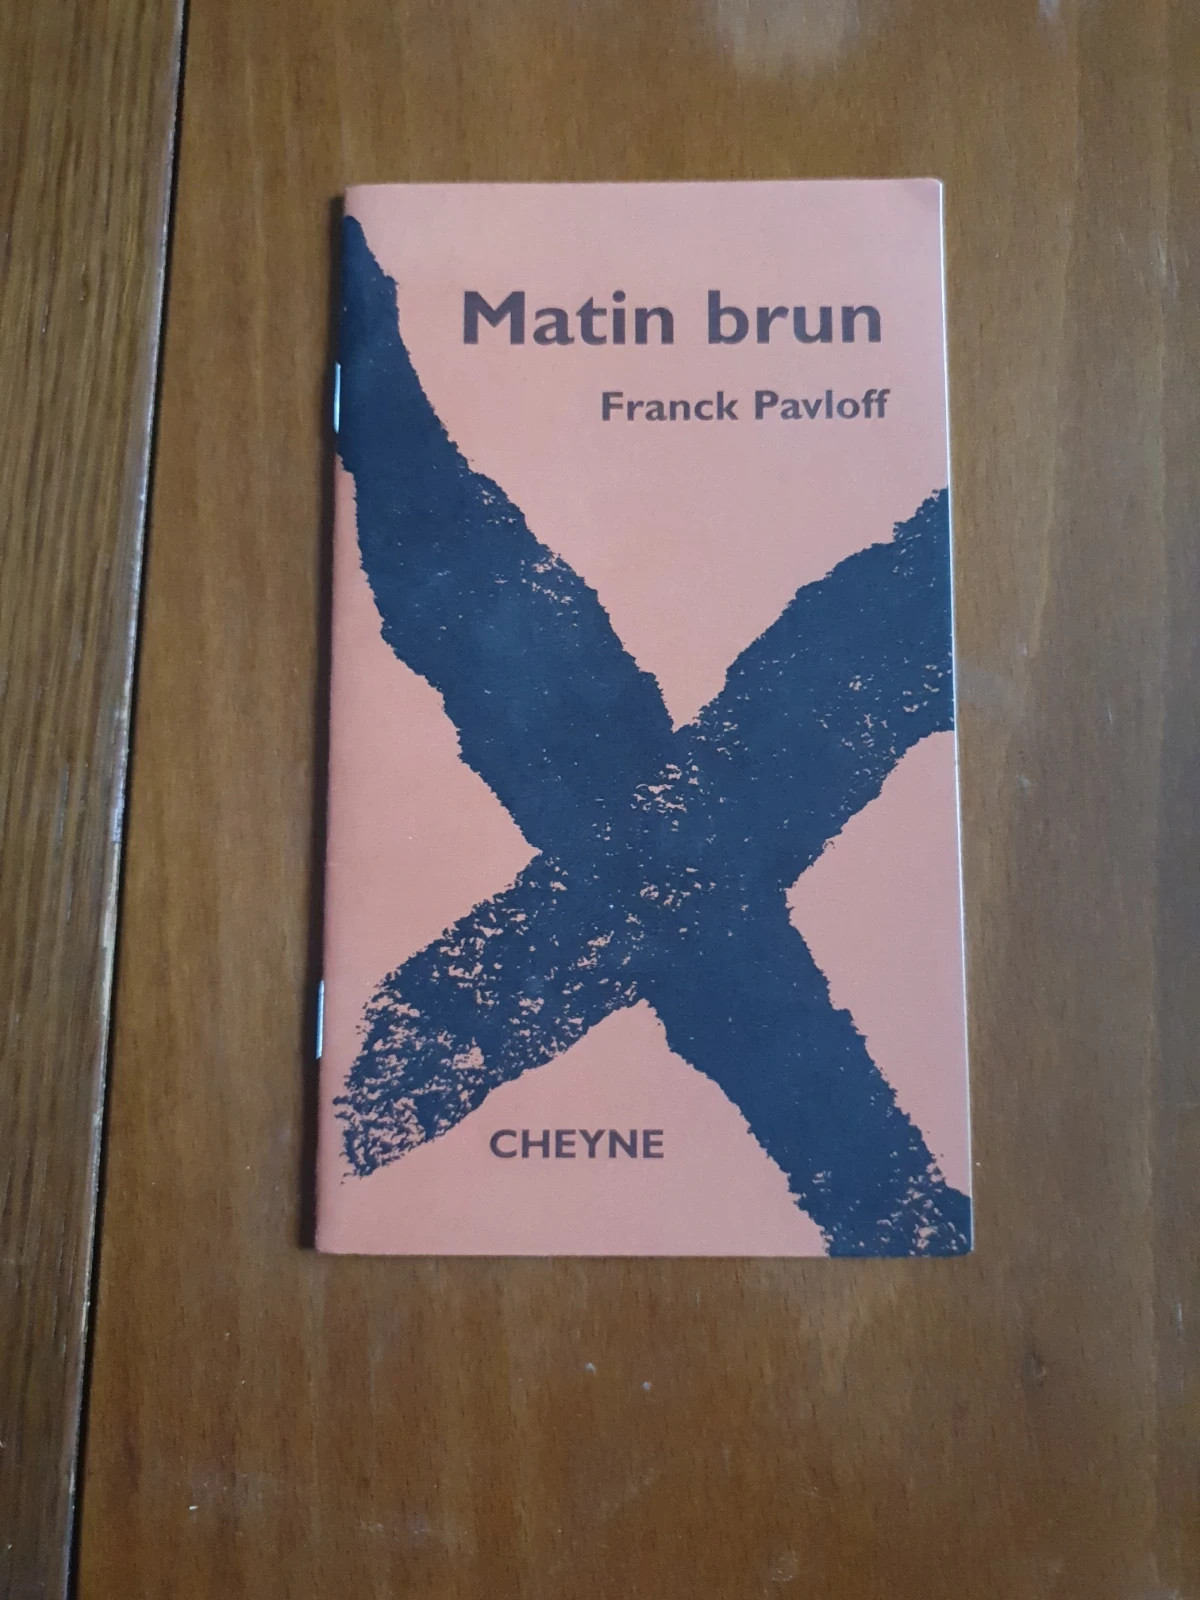 PAVLOFF, Franck - Matin brun